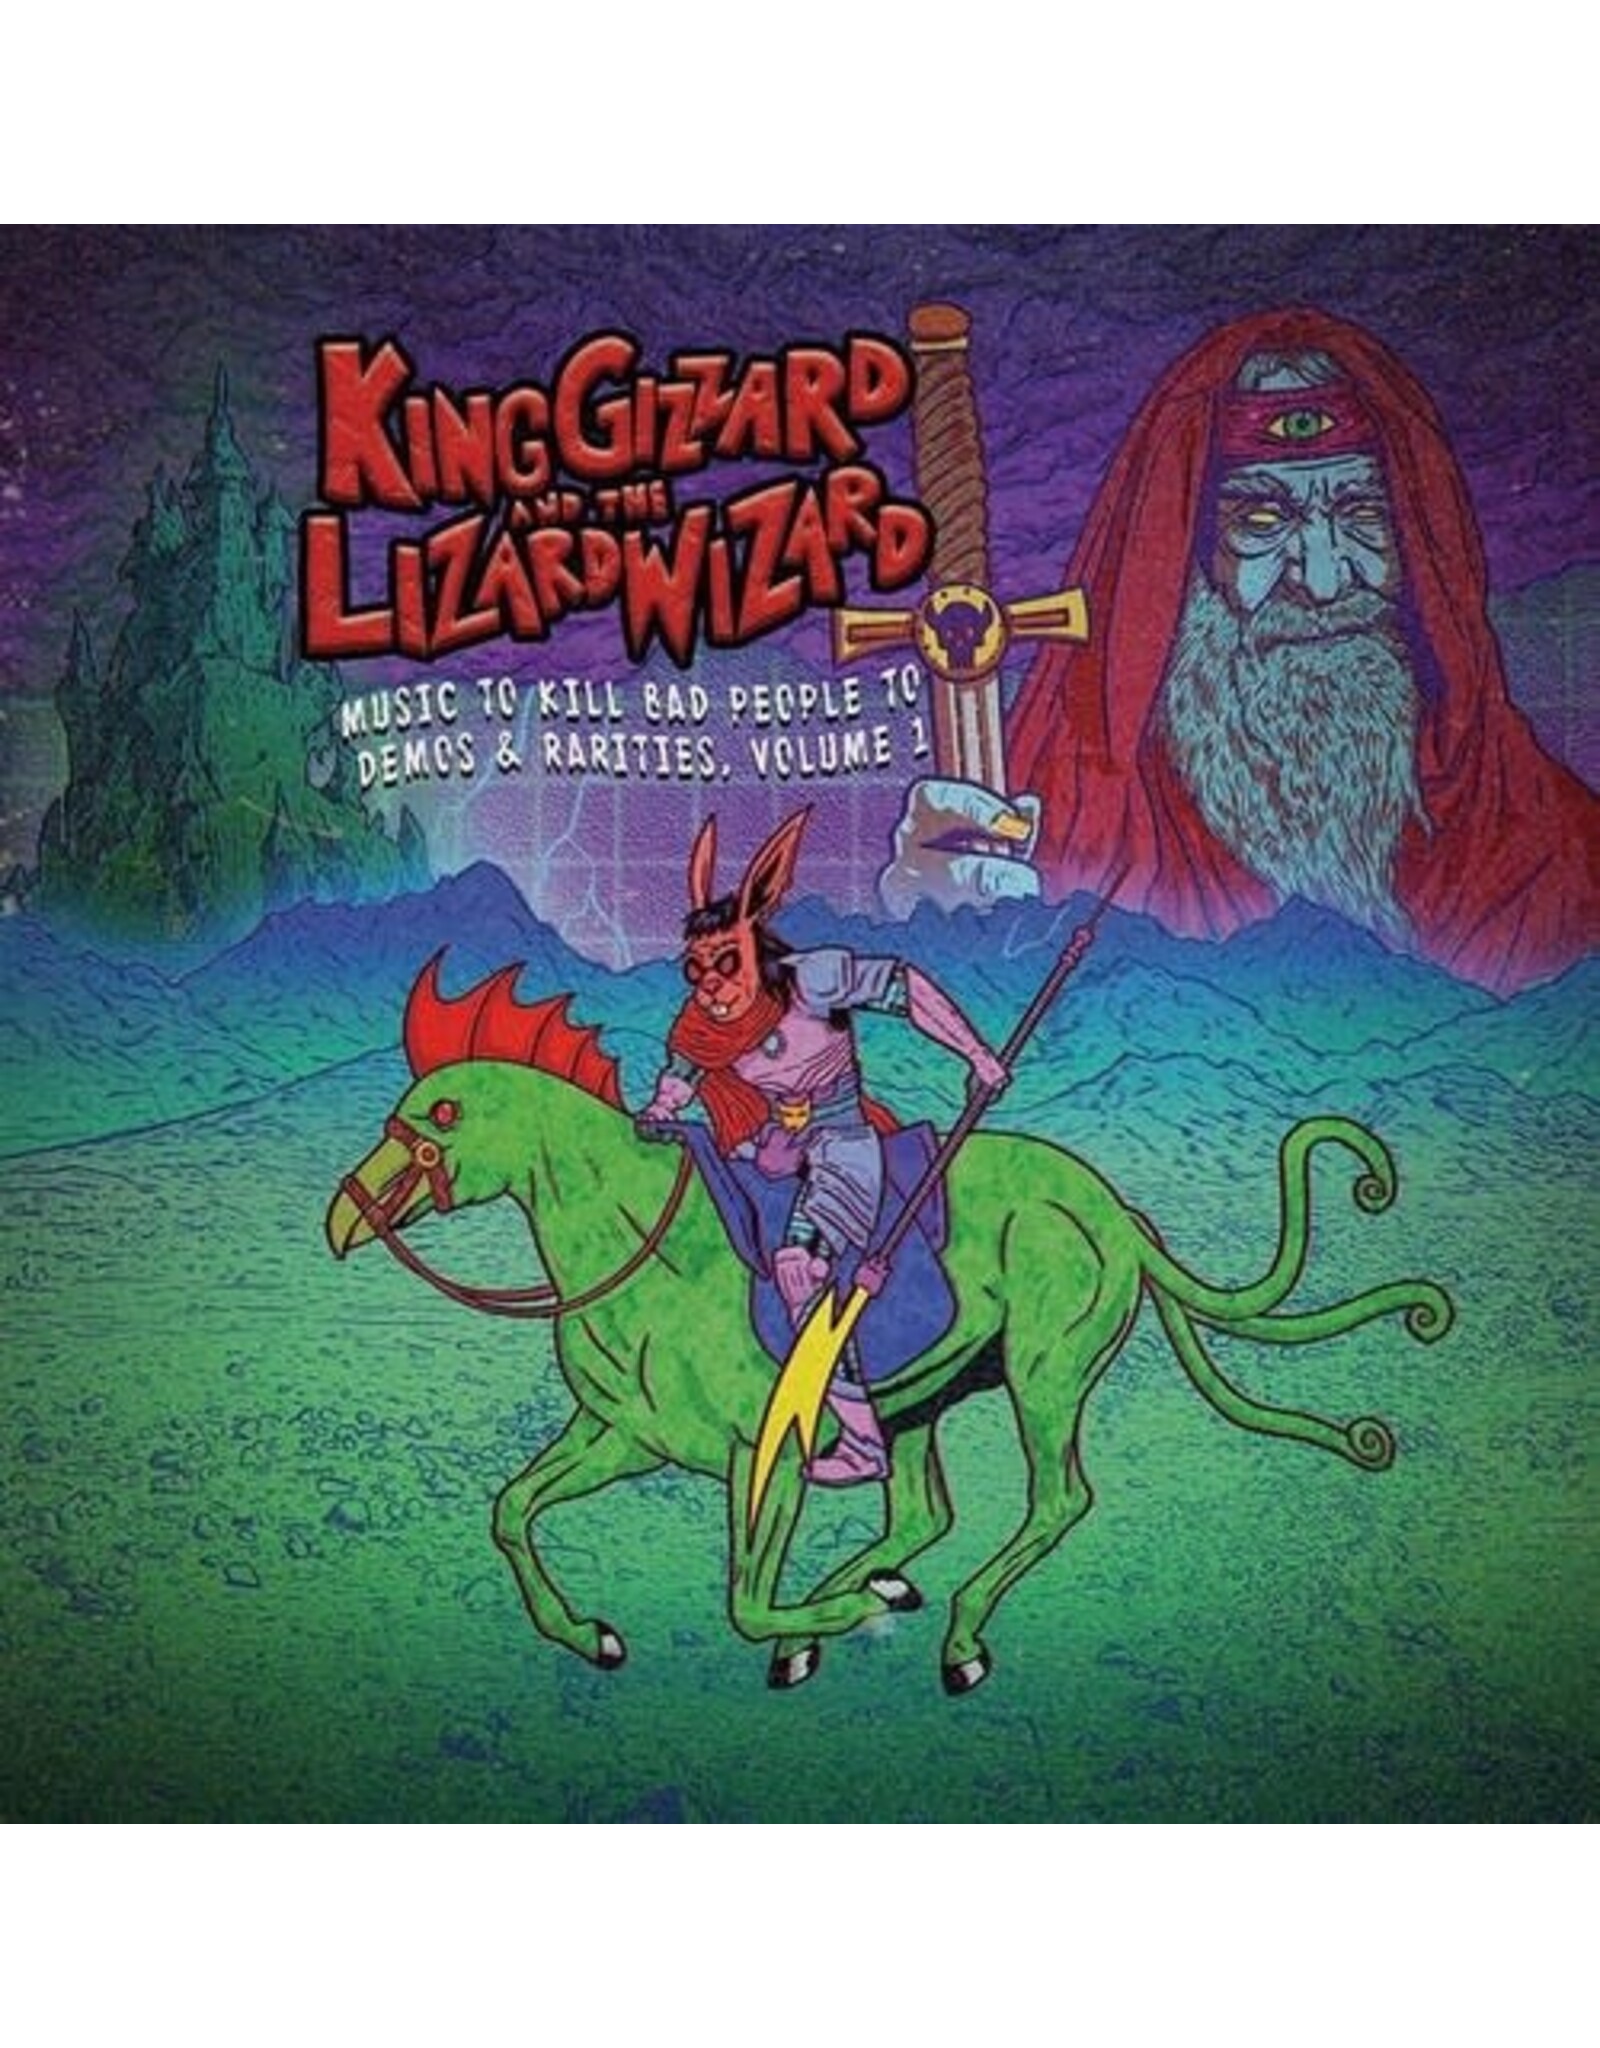 King Gizzard & the Lizard Wizard - Music To Kill Bad People To Vol. 1 (Sea Foam Vinyl) LP